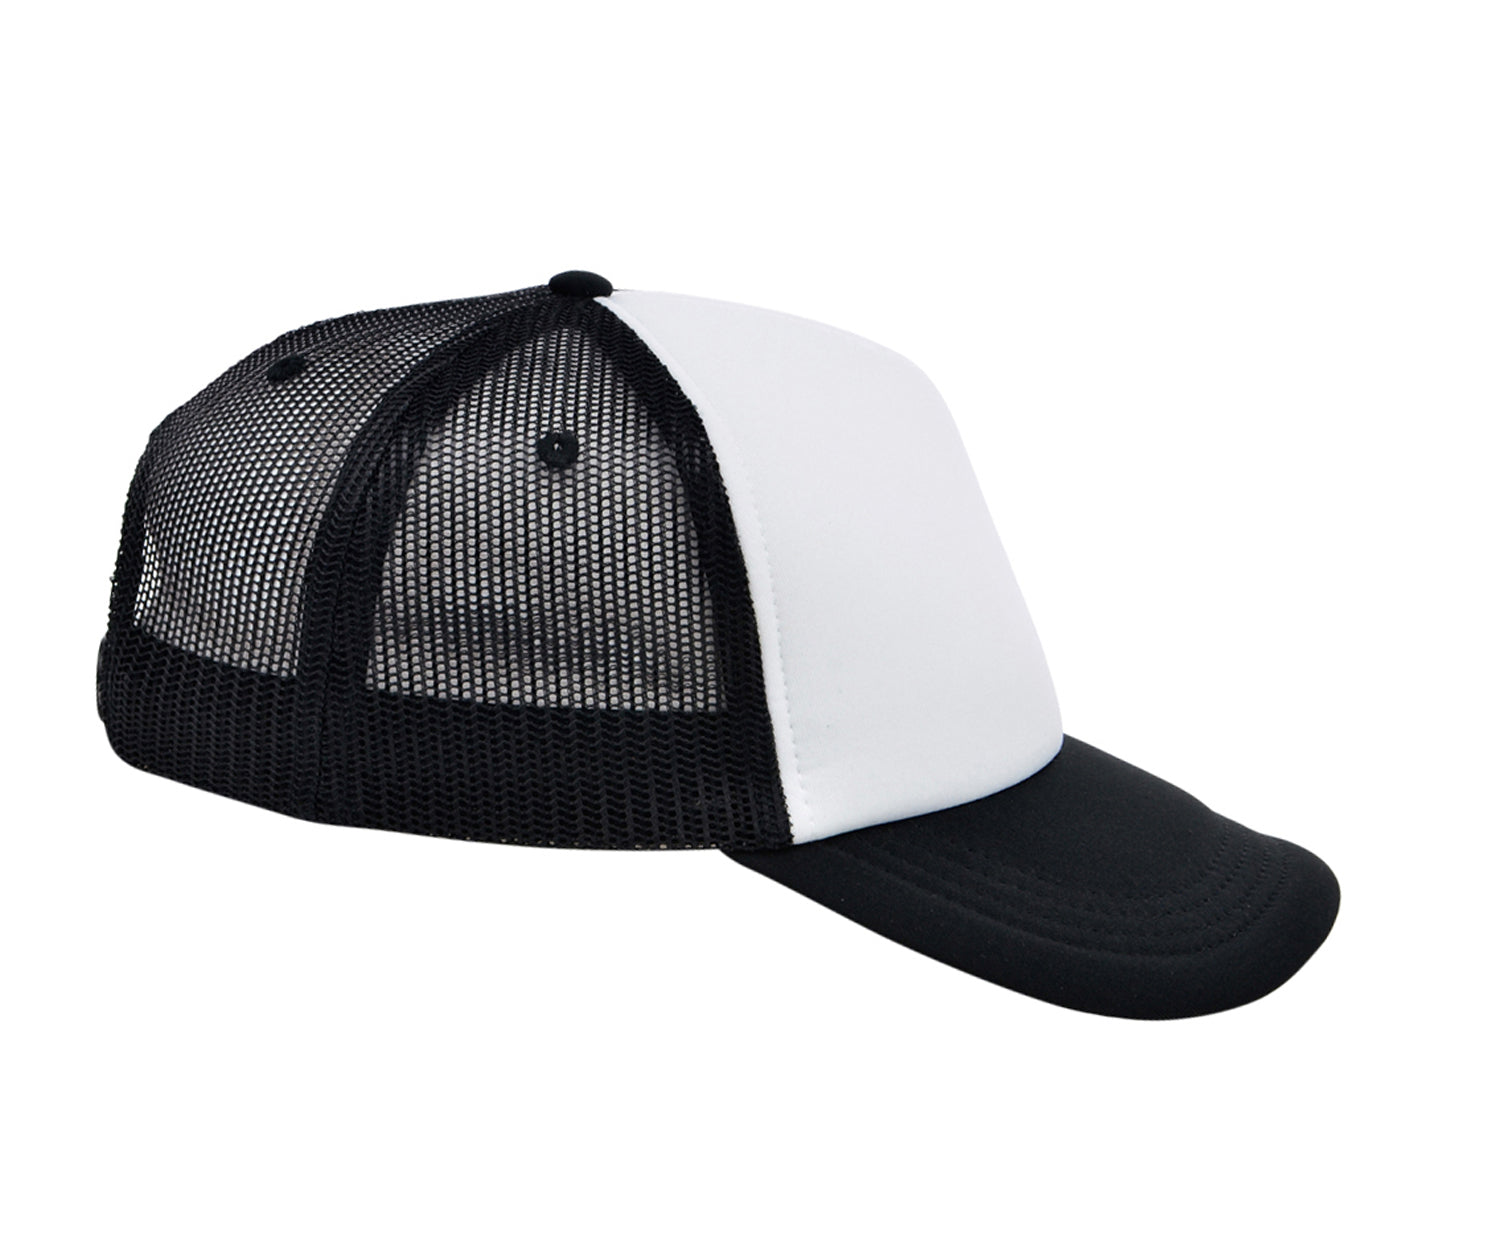 Unbranded Sponge Foam Trucker Hat, Blank Mesh Cap, White/Black